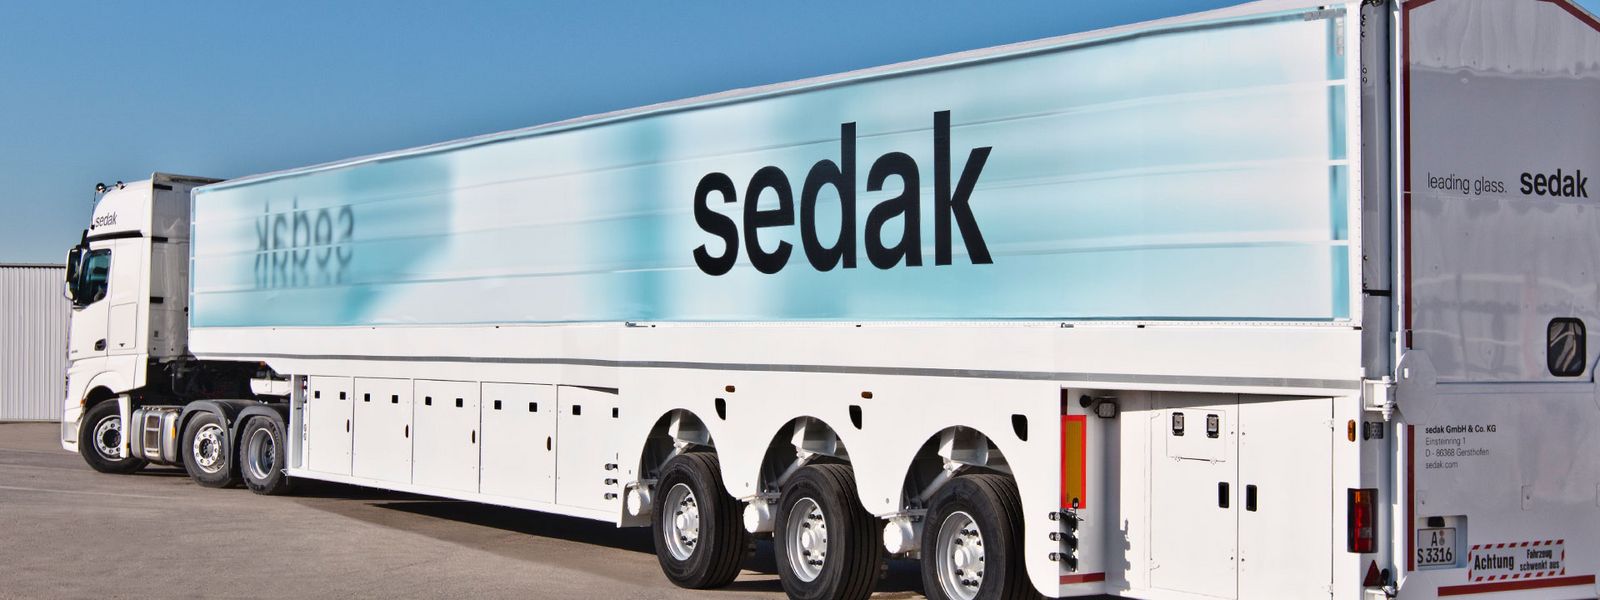 sedak logistics transports glass safely to its destination